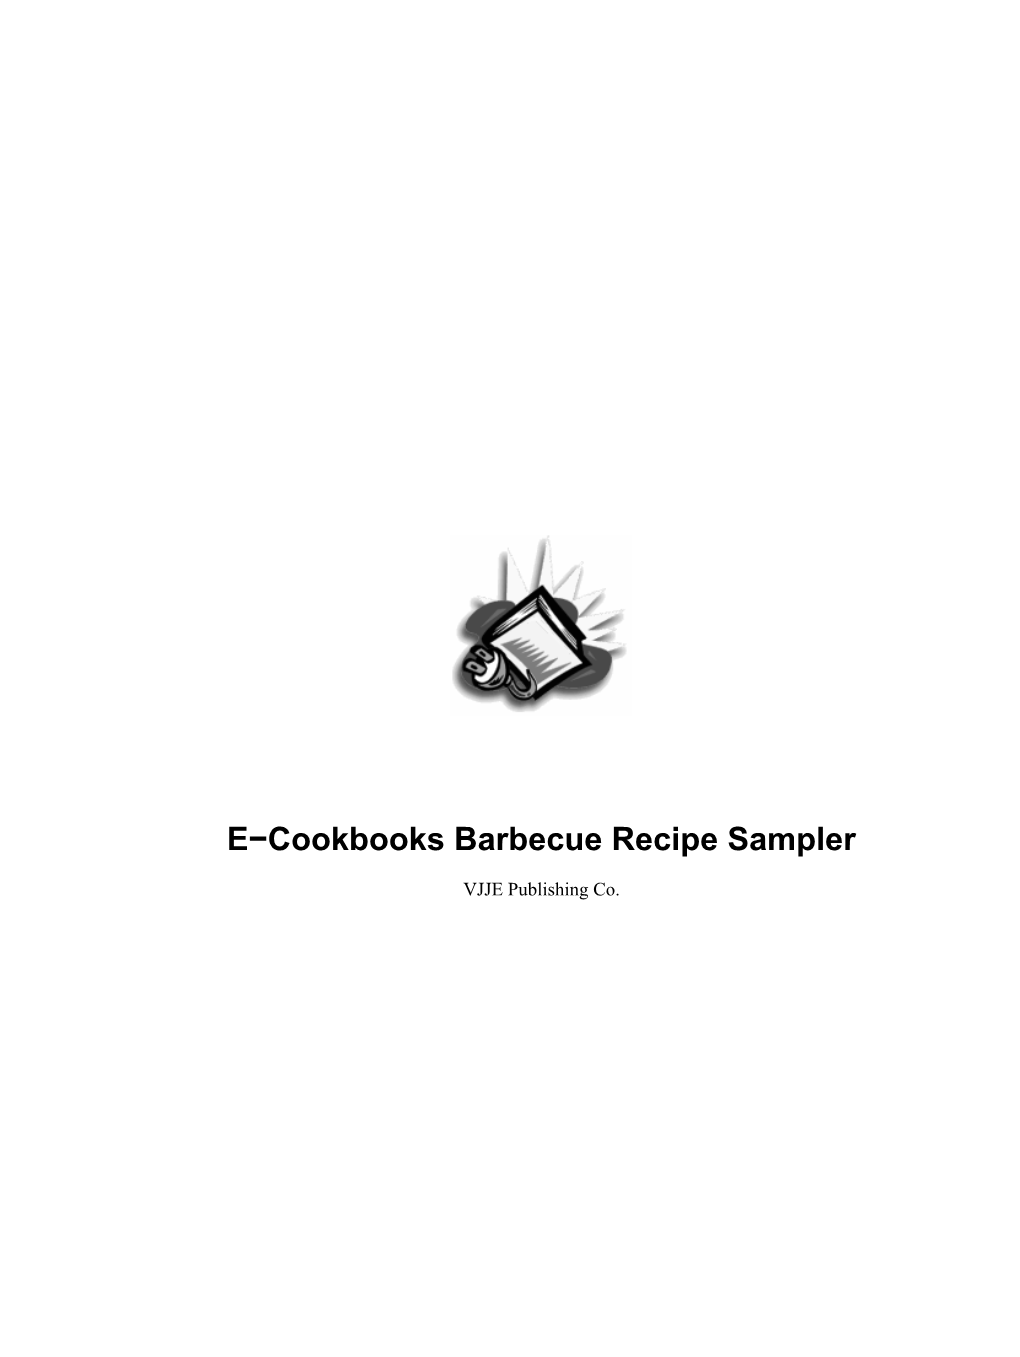 E-Cookbooks Barbecue Recipe Sampler